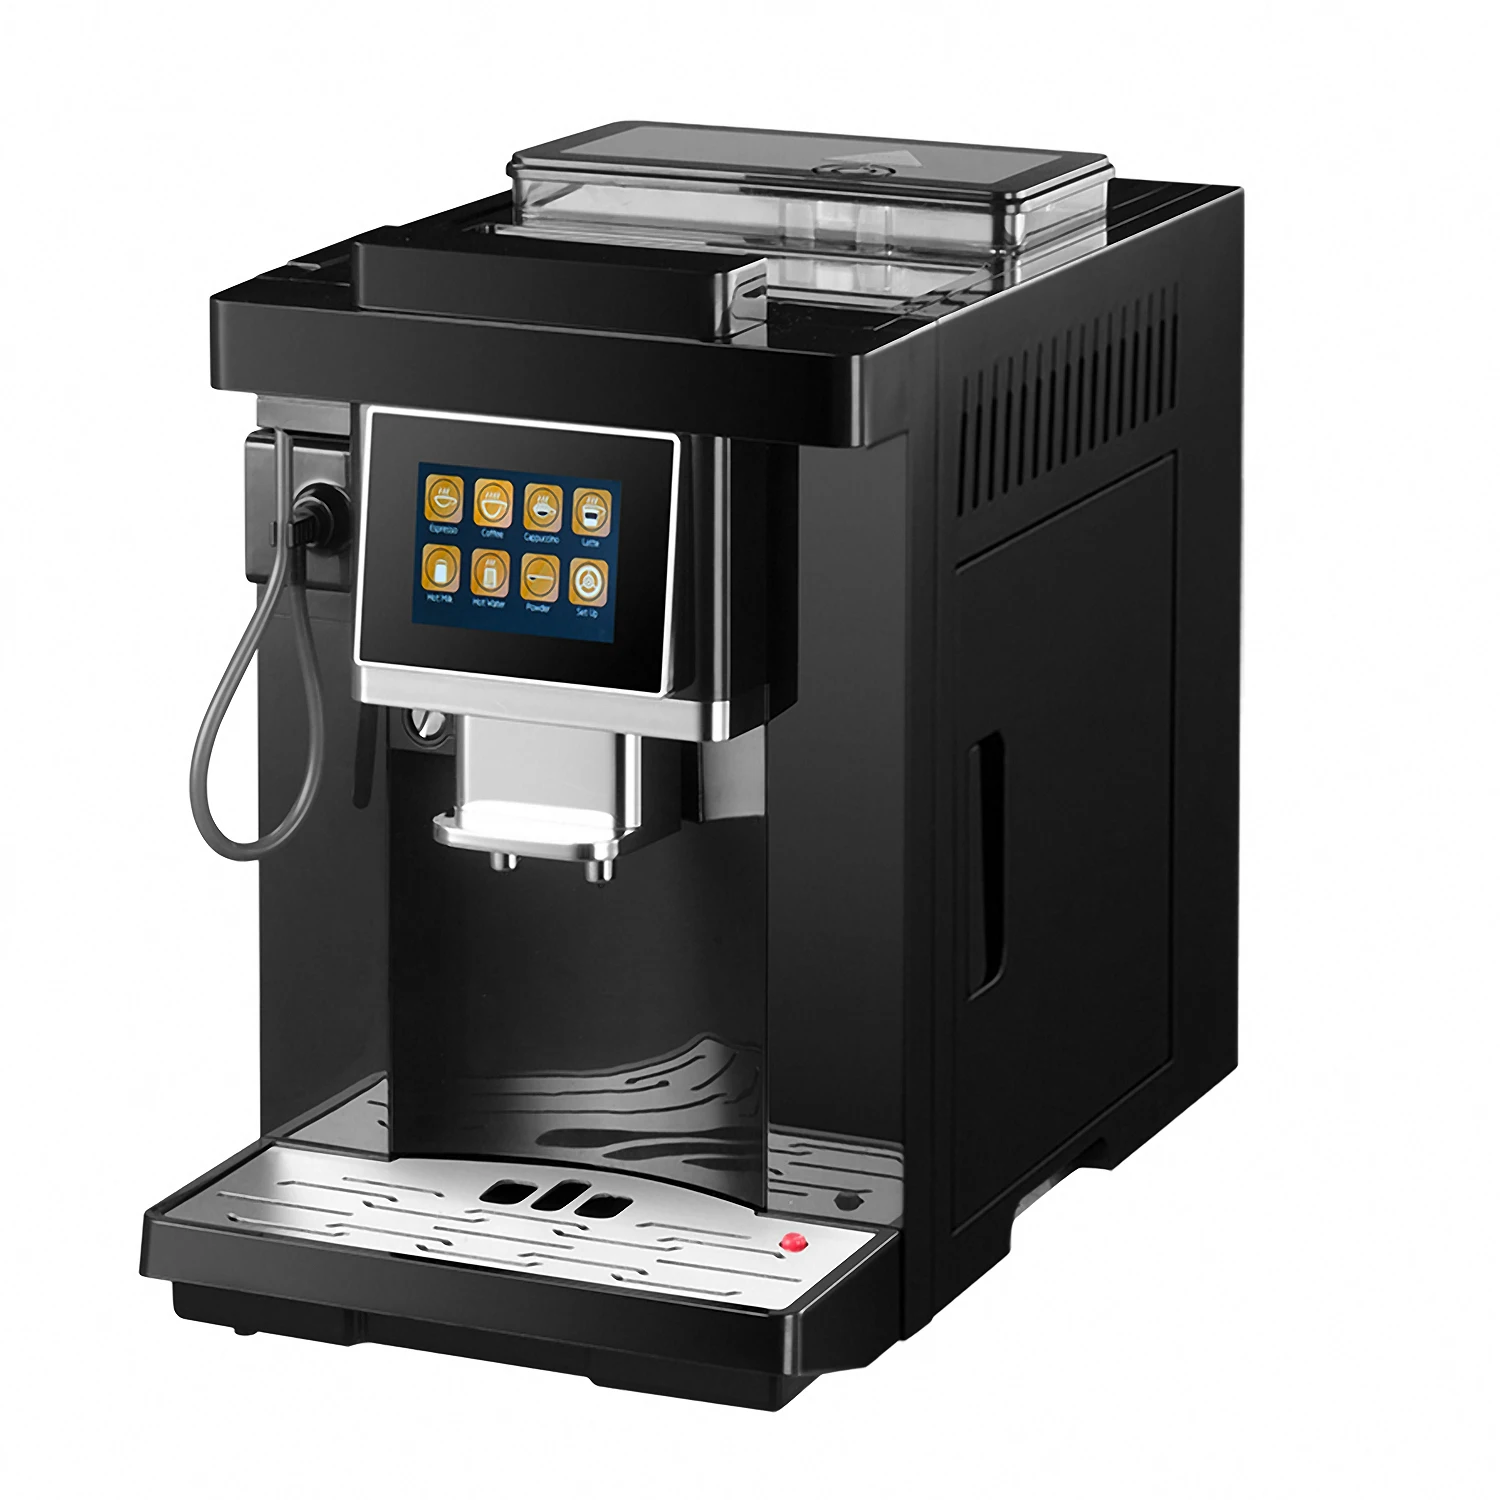 

US Direct Sale Double Boilers One Touch Cappuccino Automatic Espresso Coffee Maker Machine